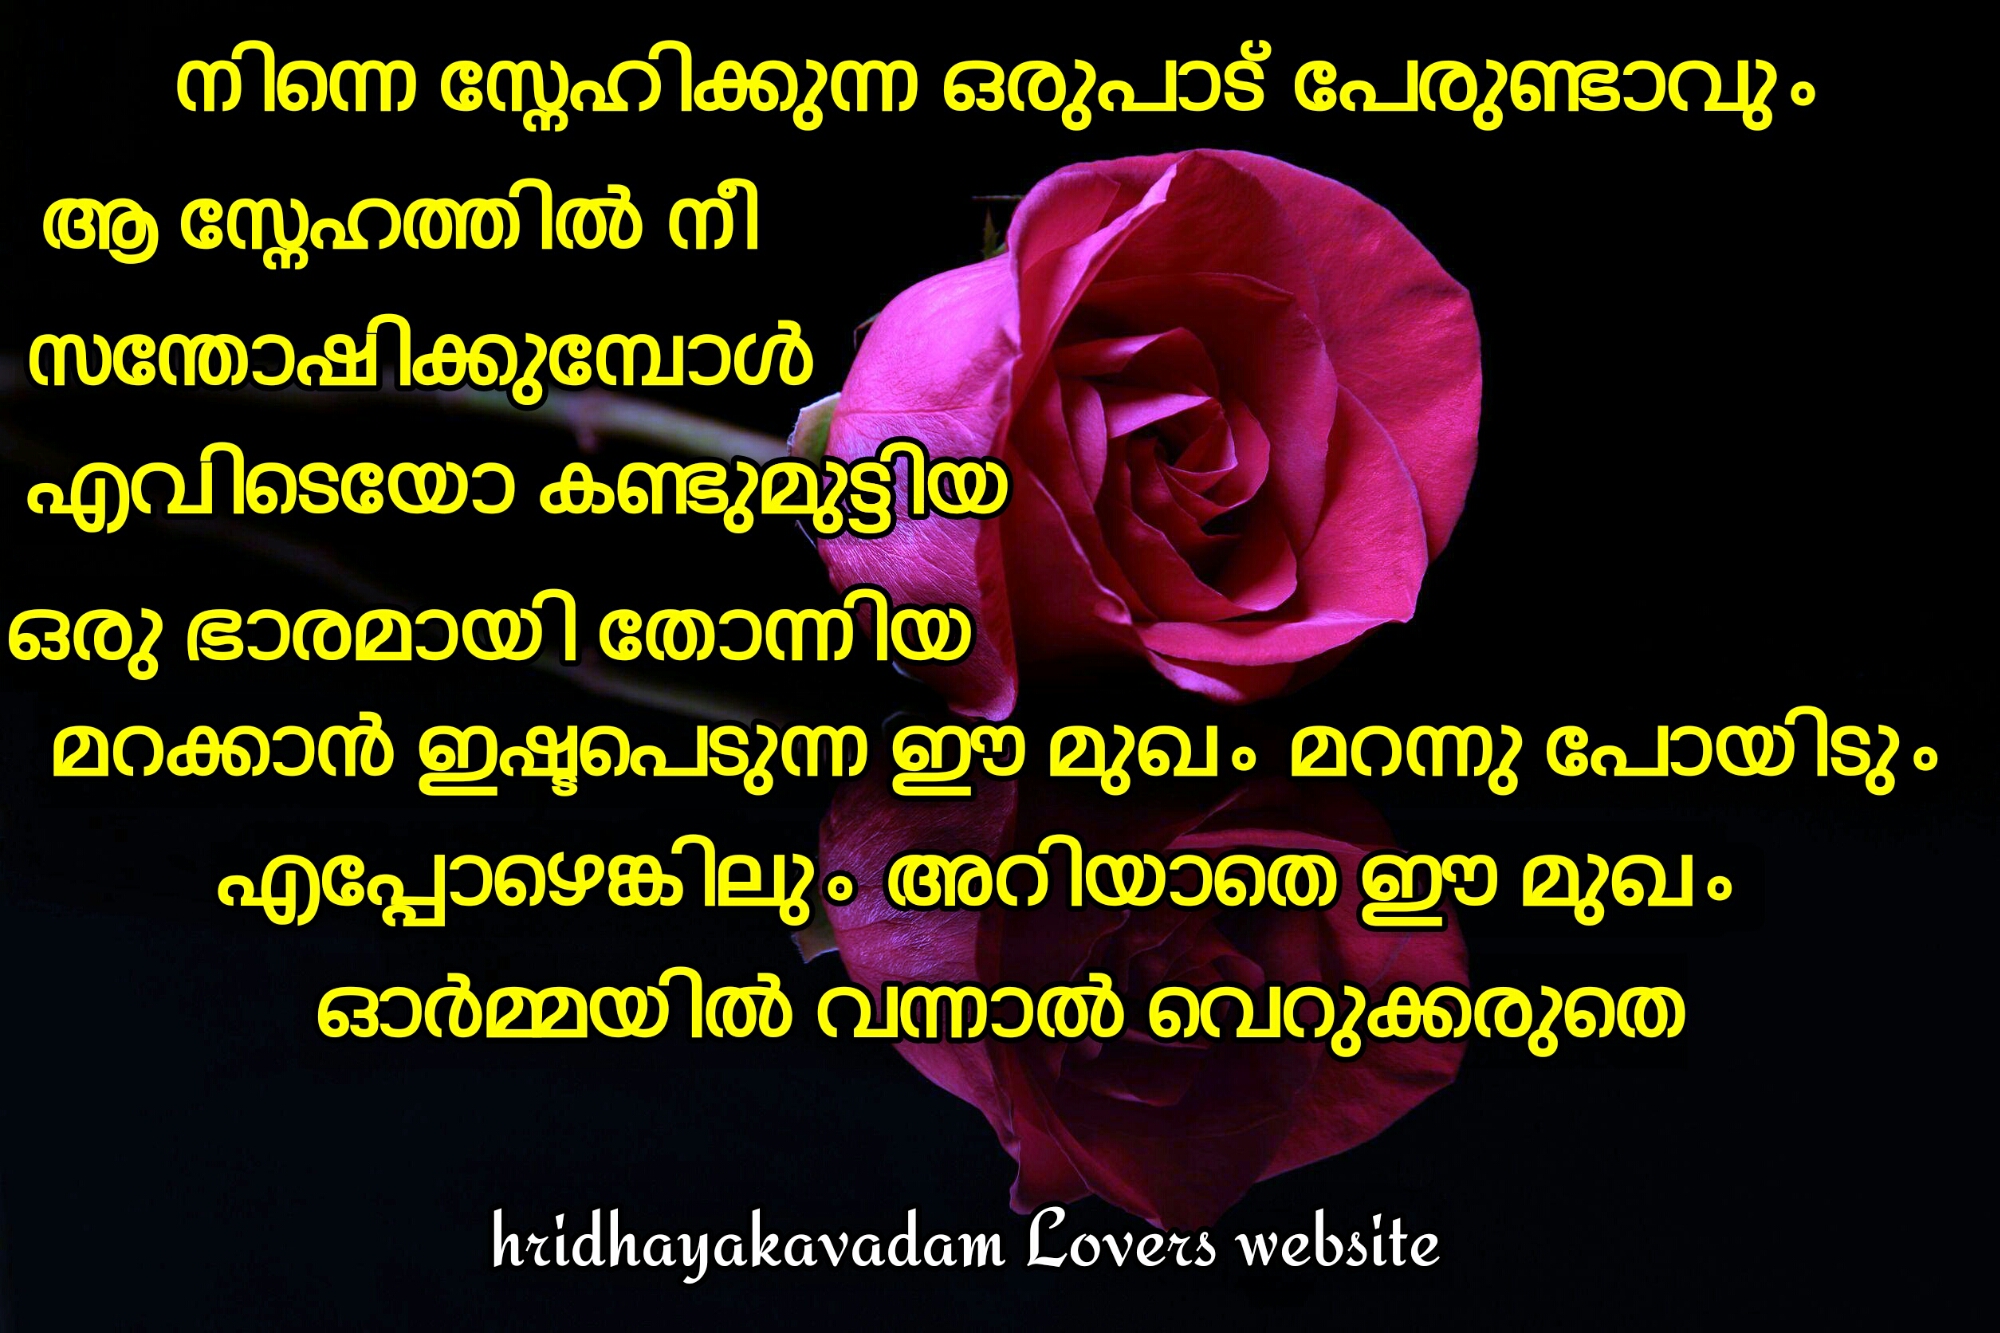 malayalam love failure words